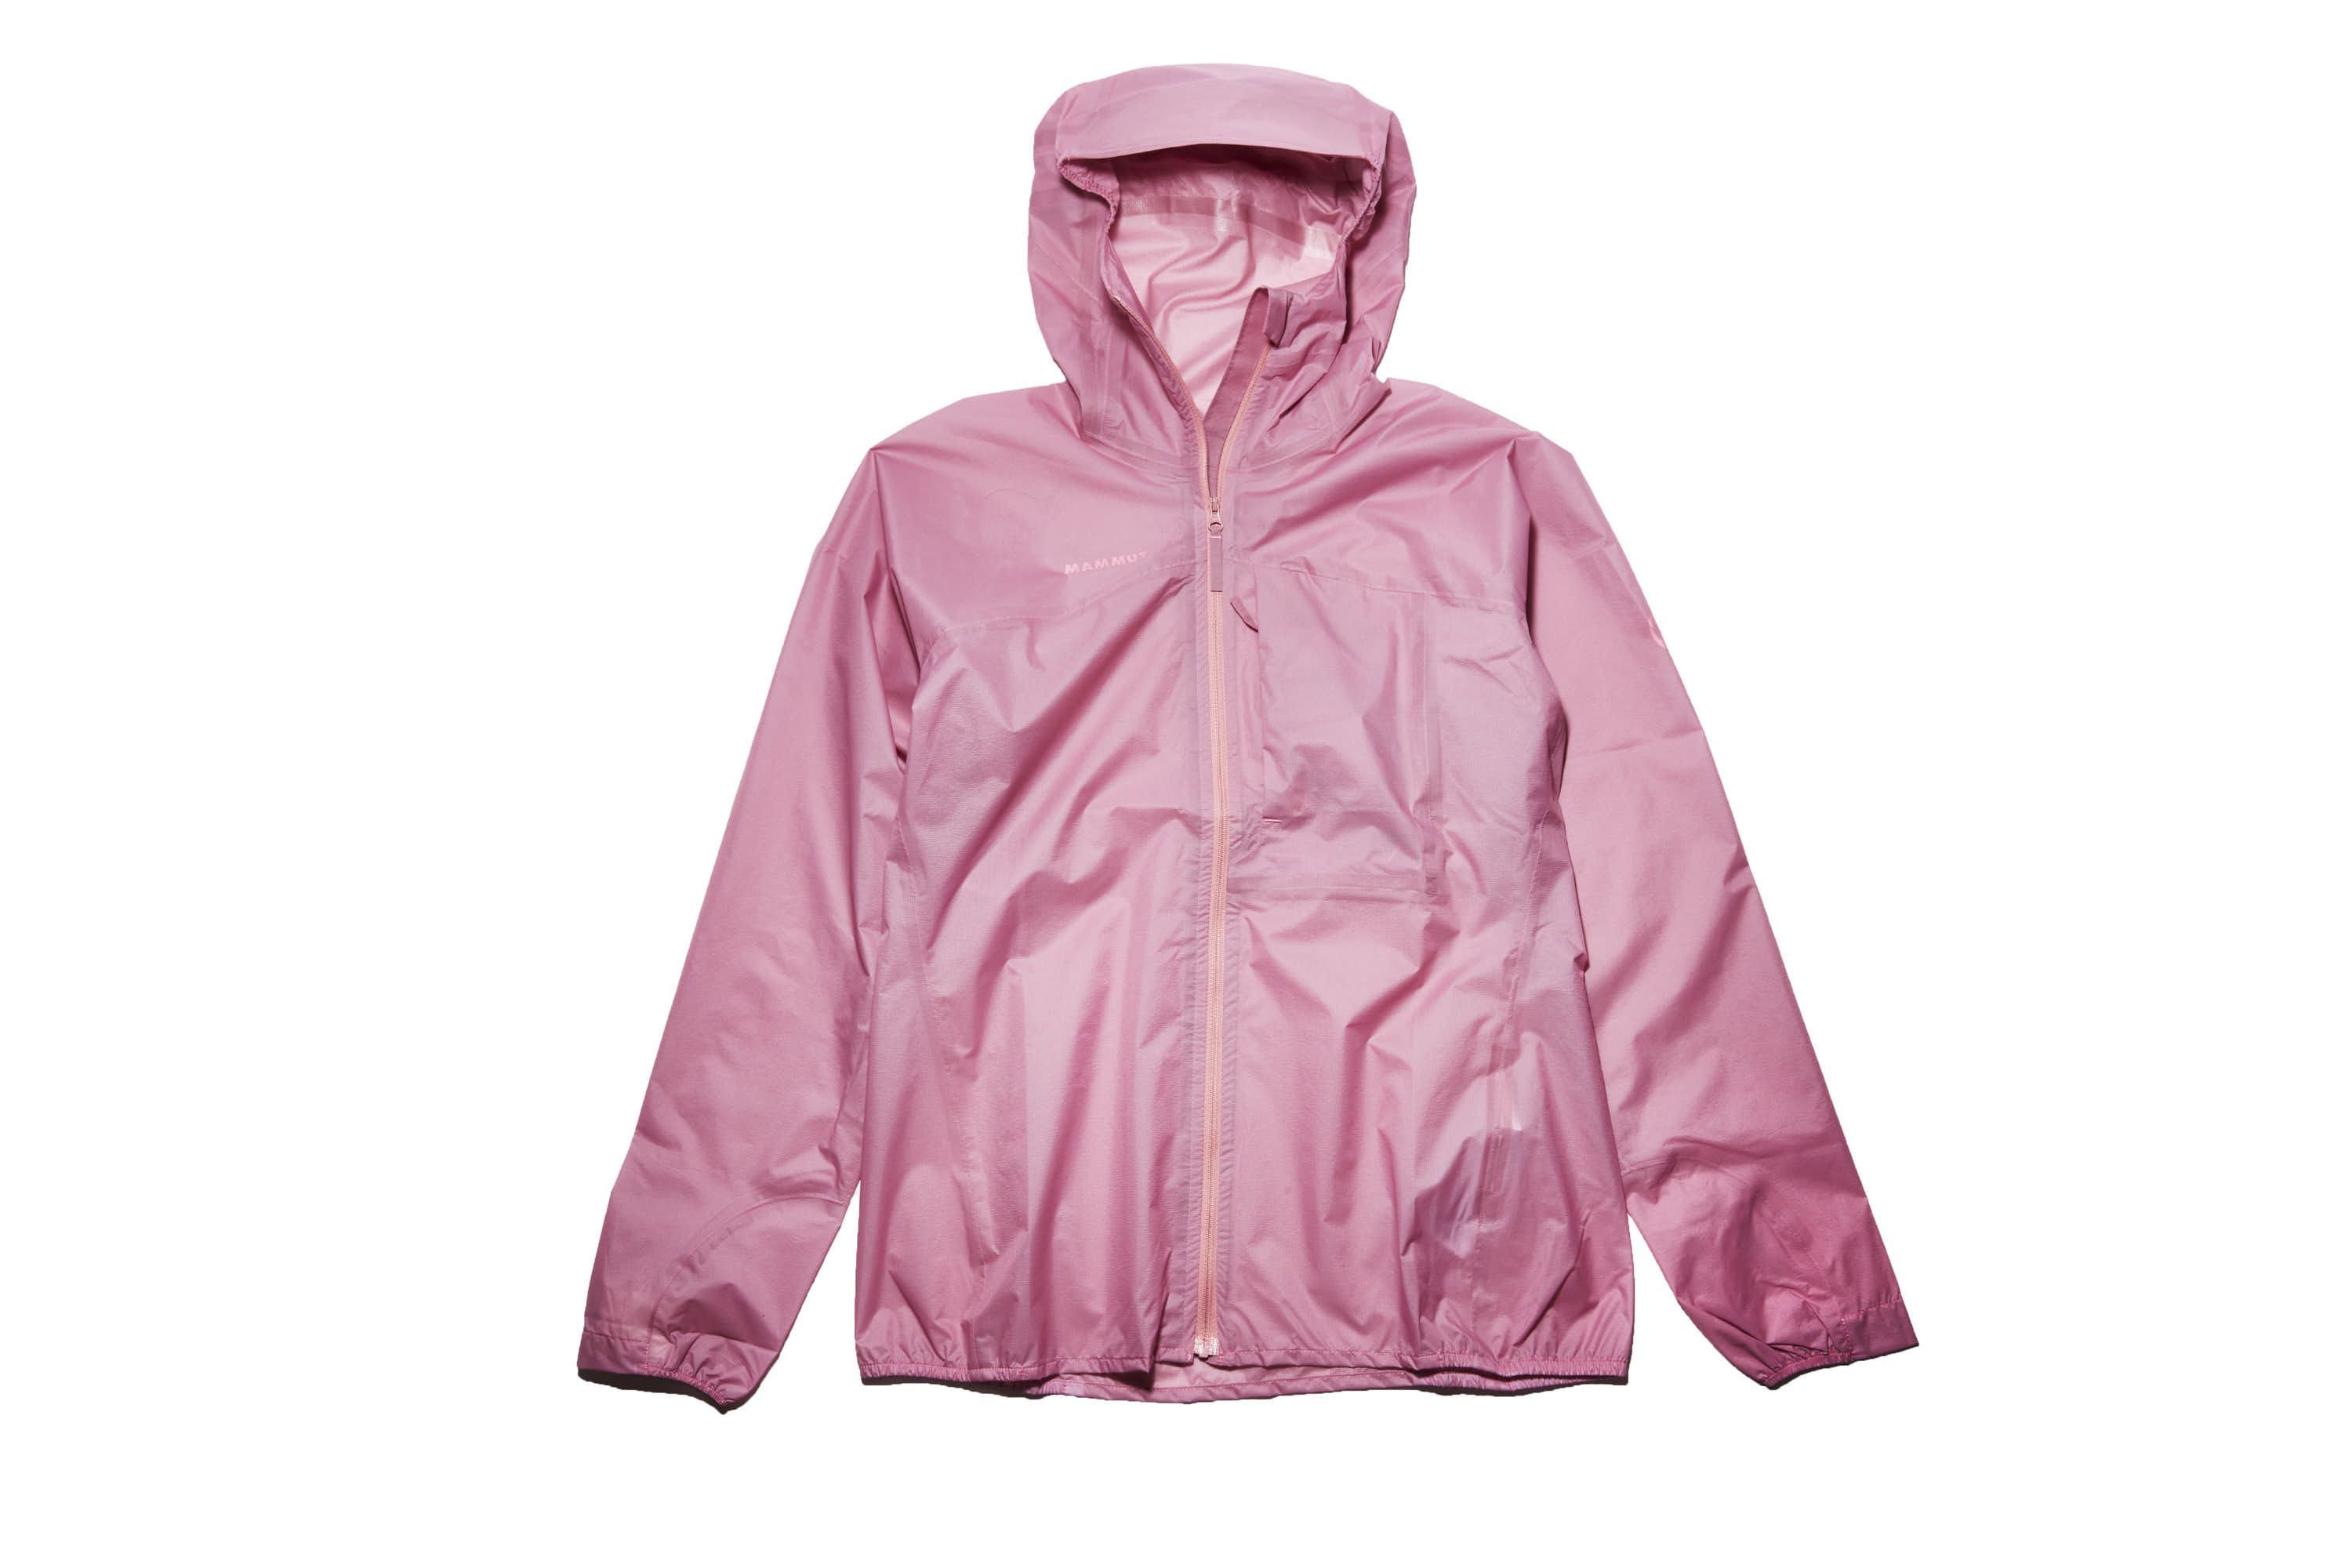 brooks jackets mens pink